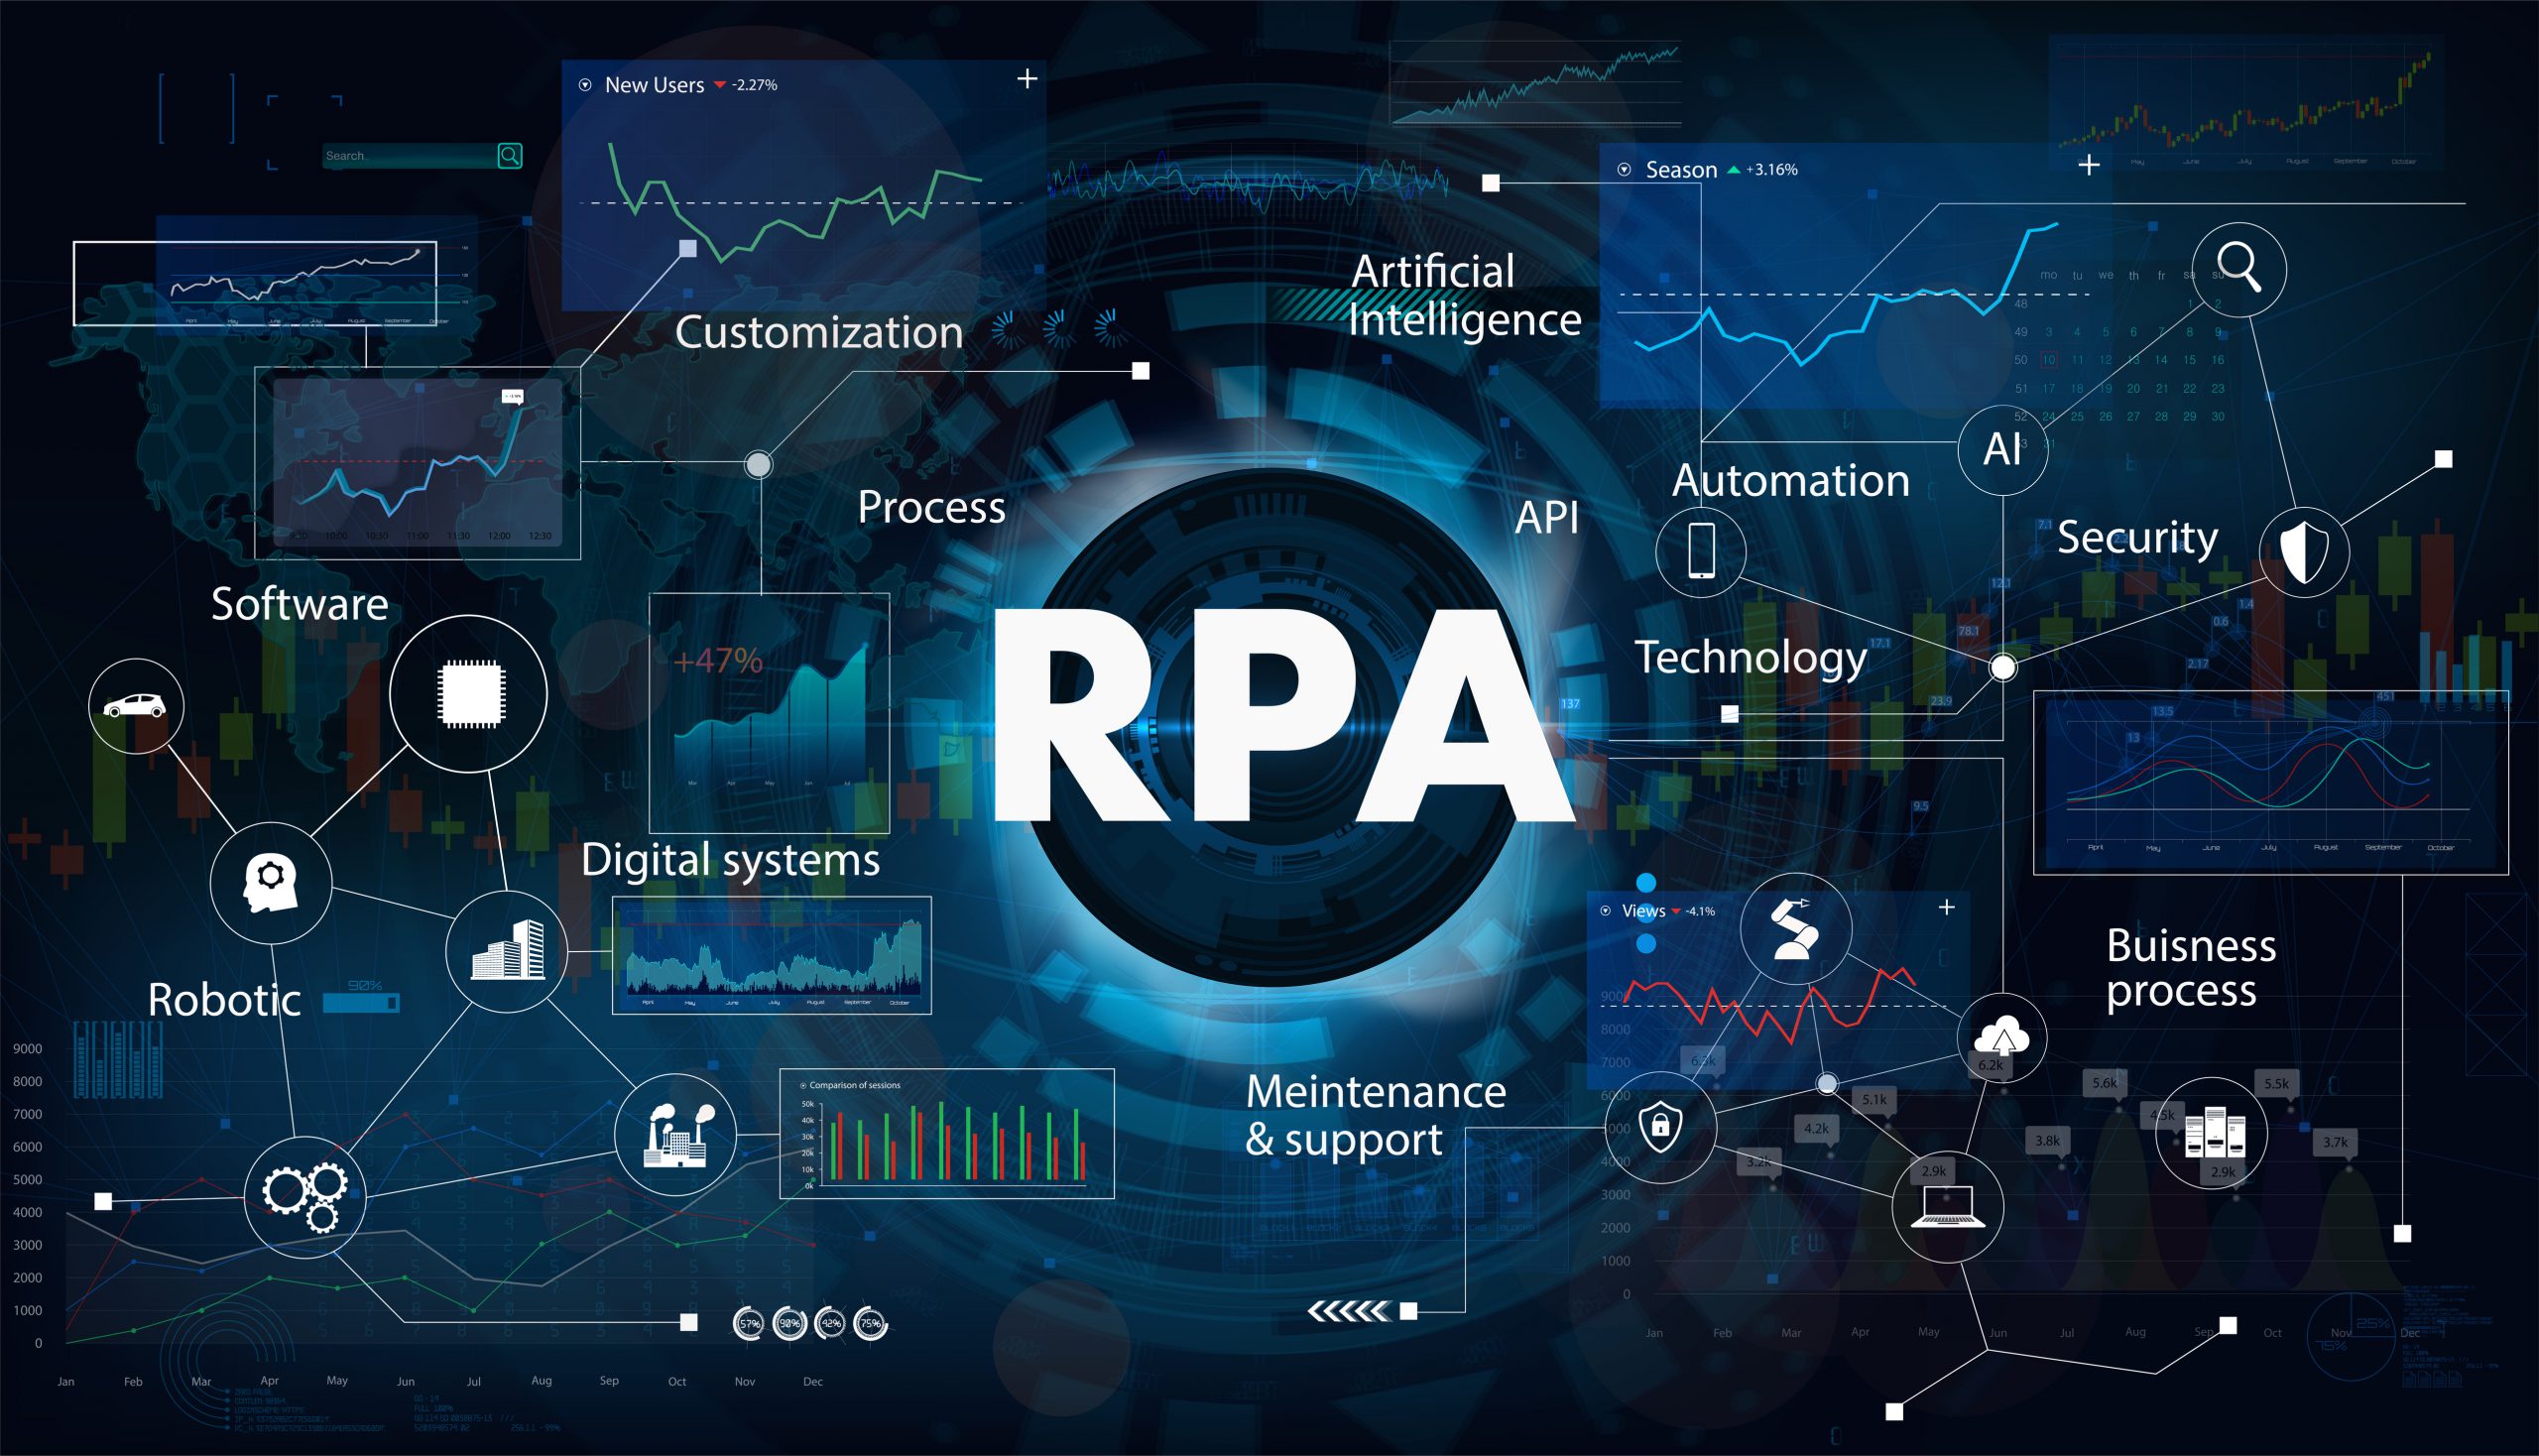 RPA×AIでさらに広がる自動化の可能性について解説